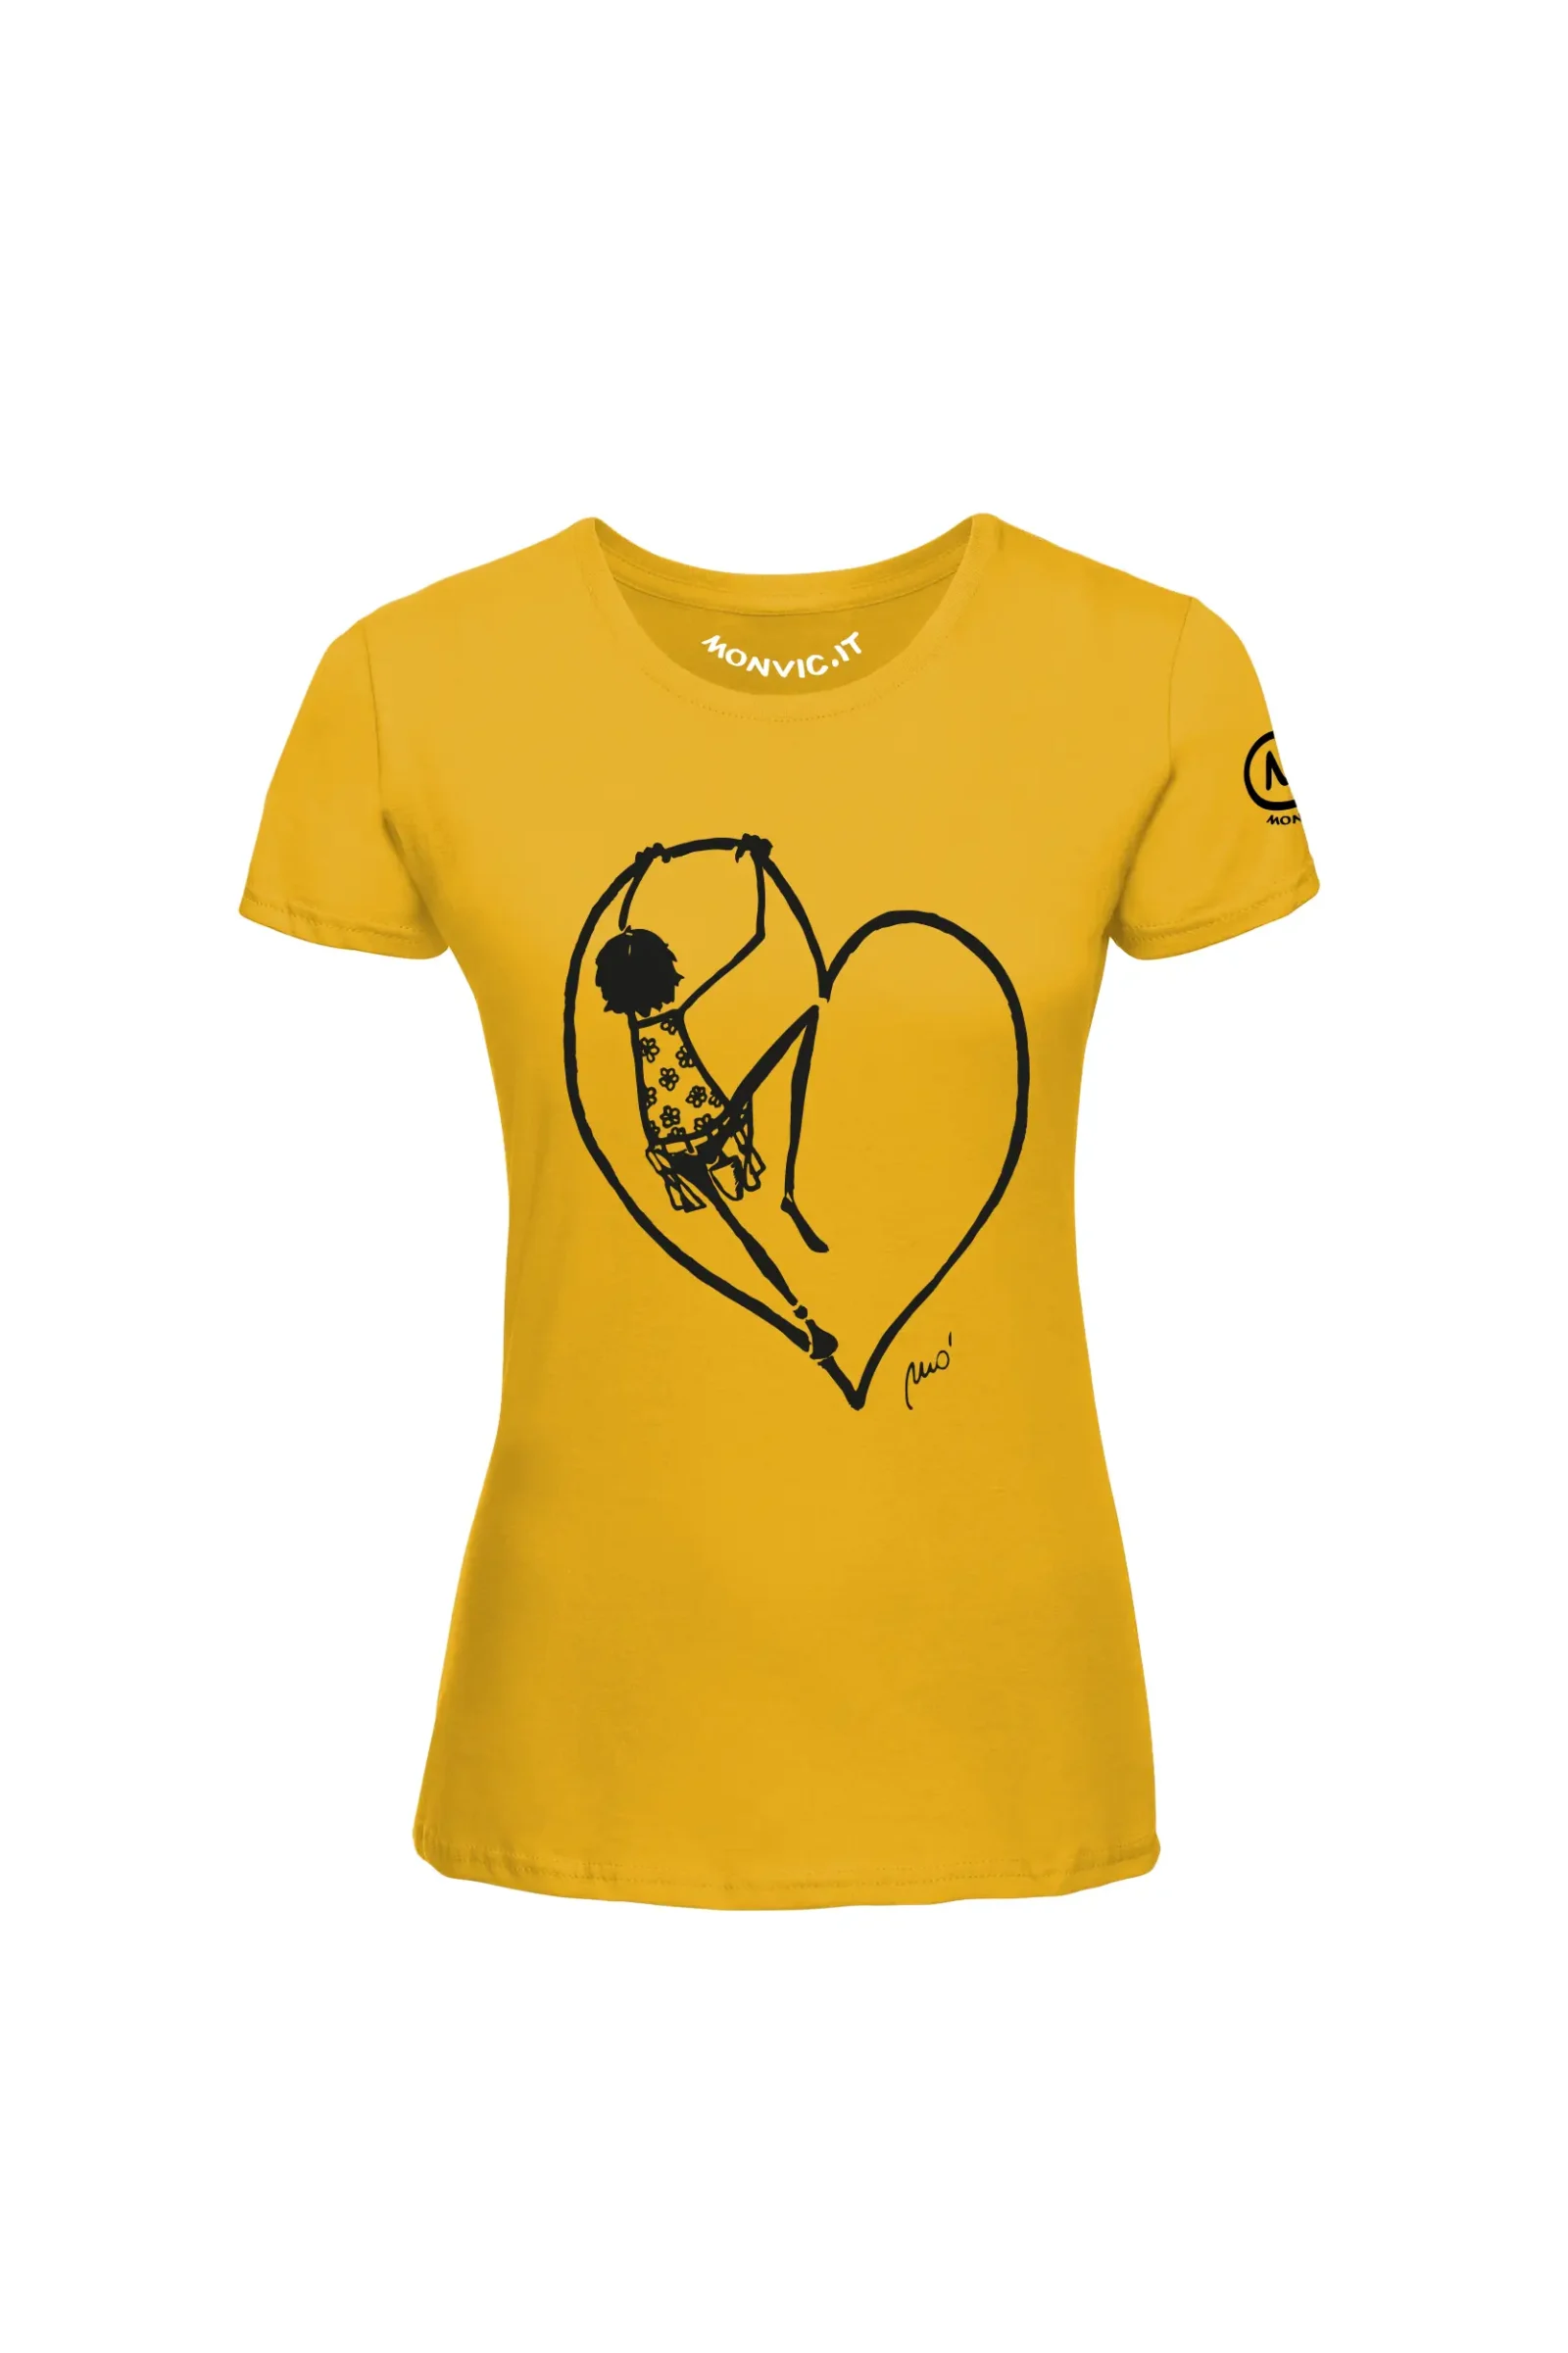 T-shirt escalade femme - coton jaune - graphisme "Pina" - SHARON by MONVIC